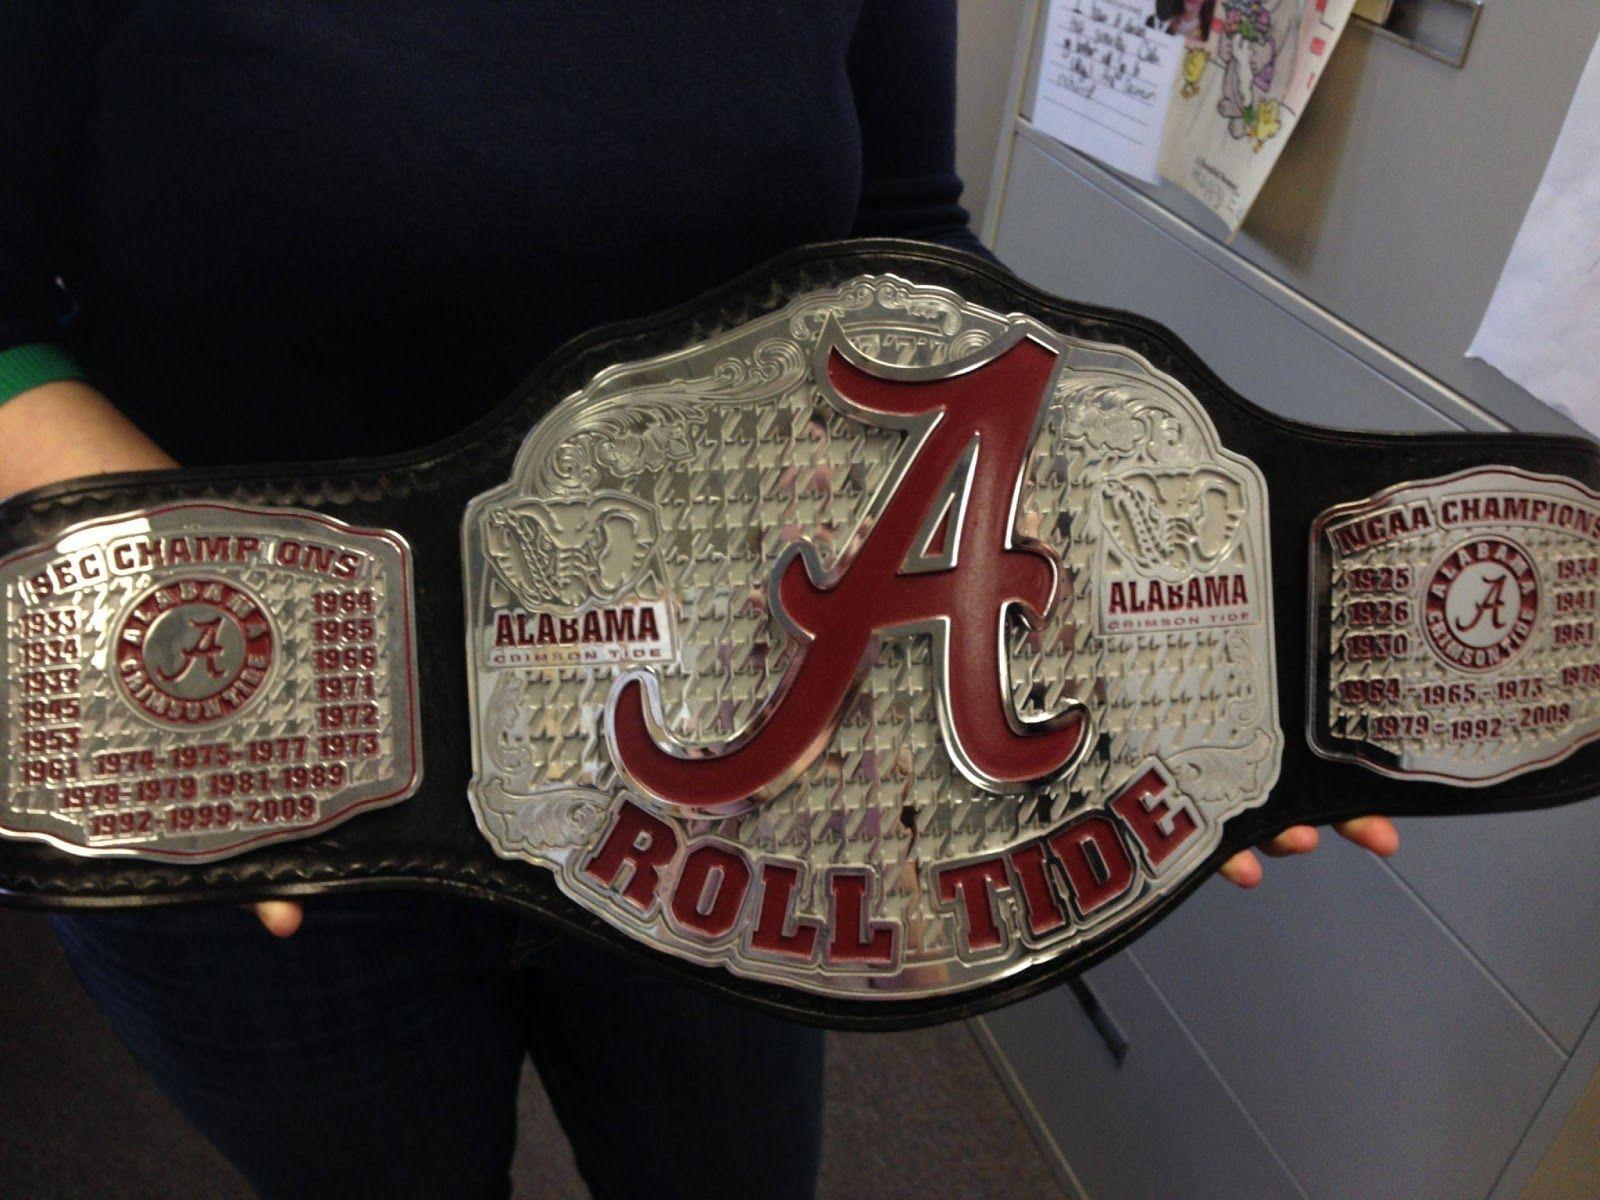 Blets Title Logo - Shirts With Random Triangles: An Alabama wrestling title belt? An